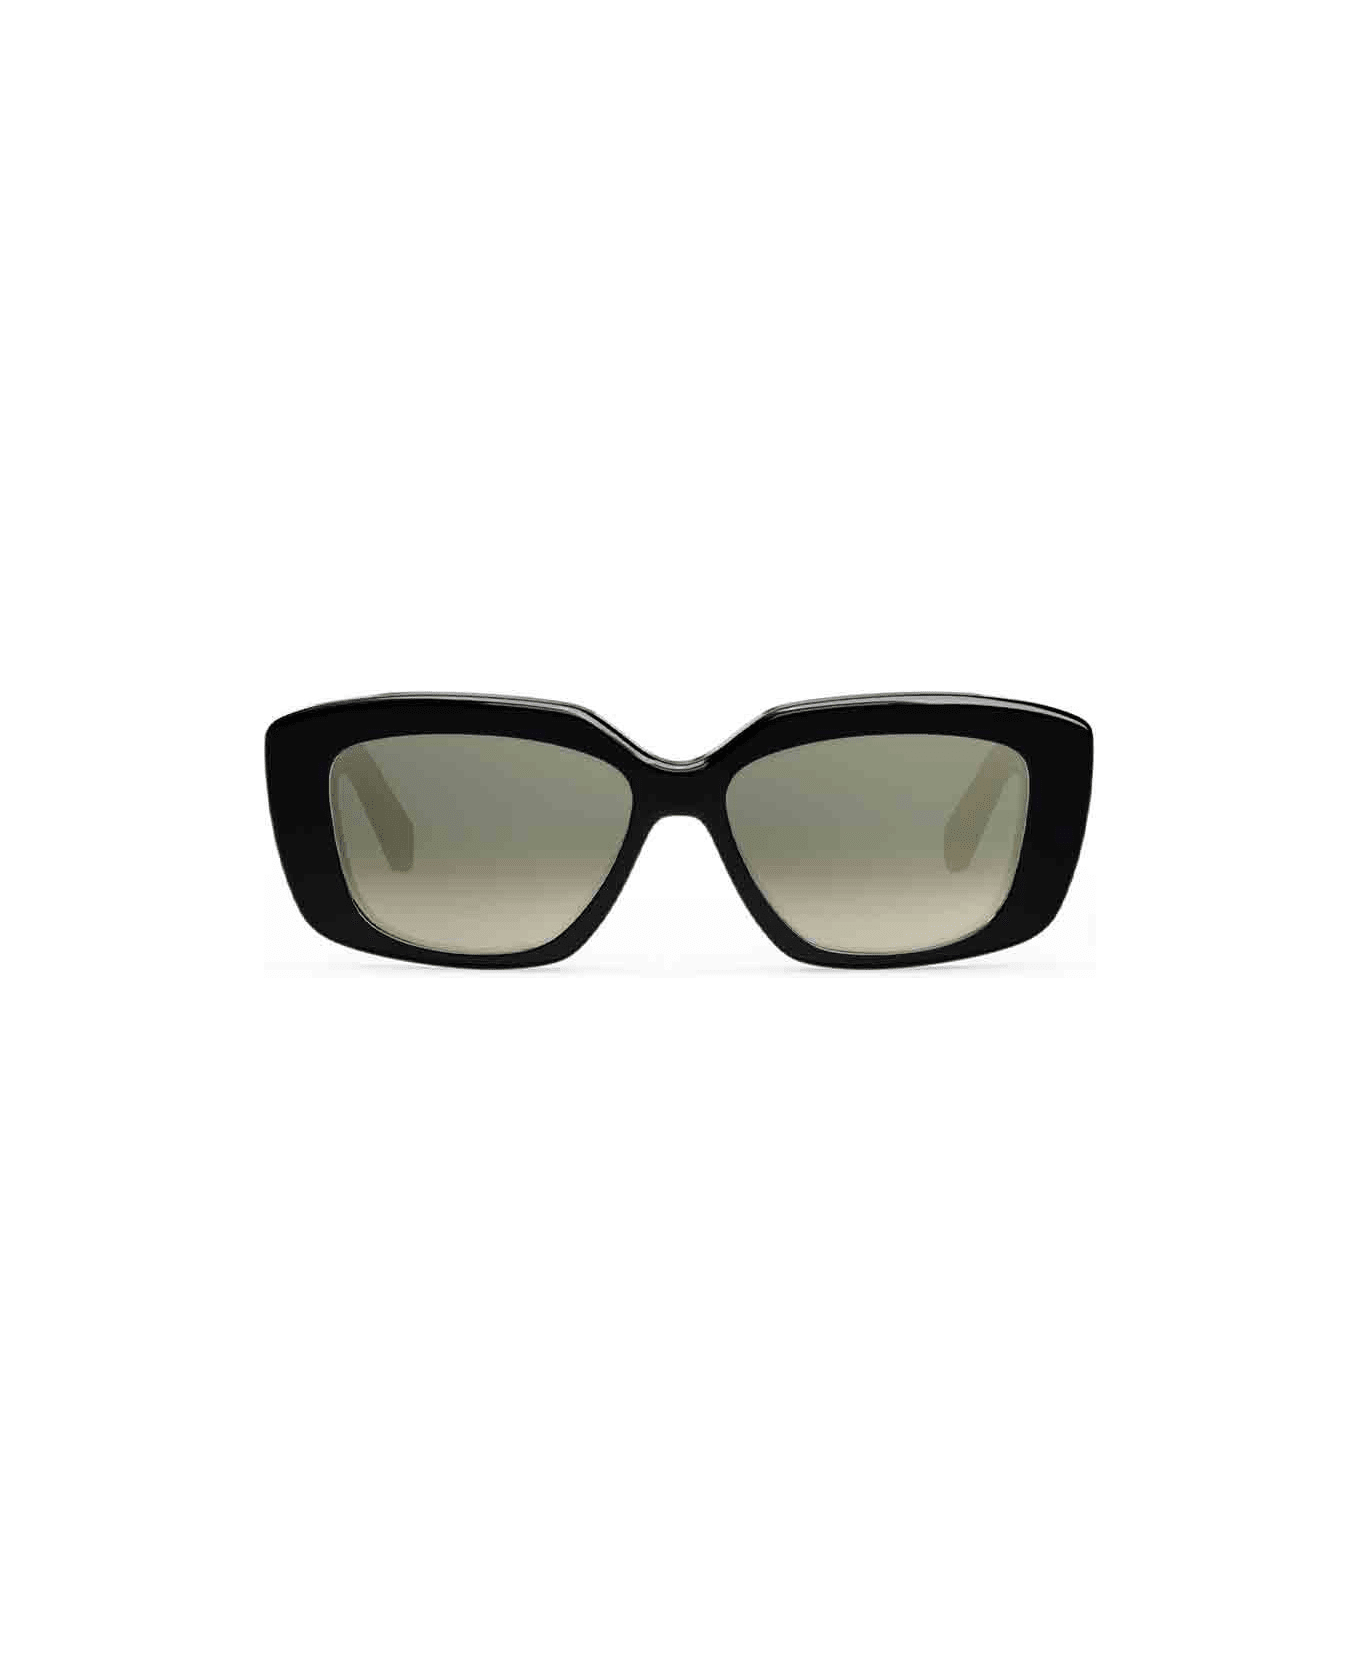 Celine Cat-eye Squared Sunglasses - Nero/Verde サングラス